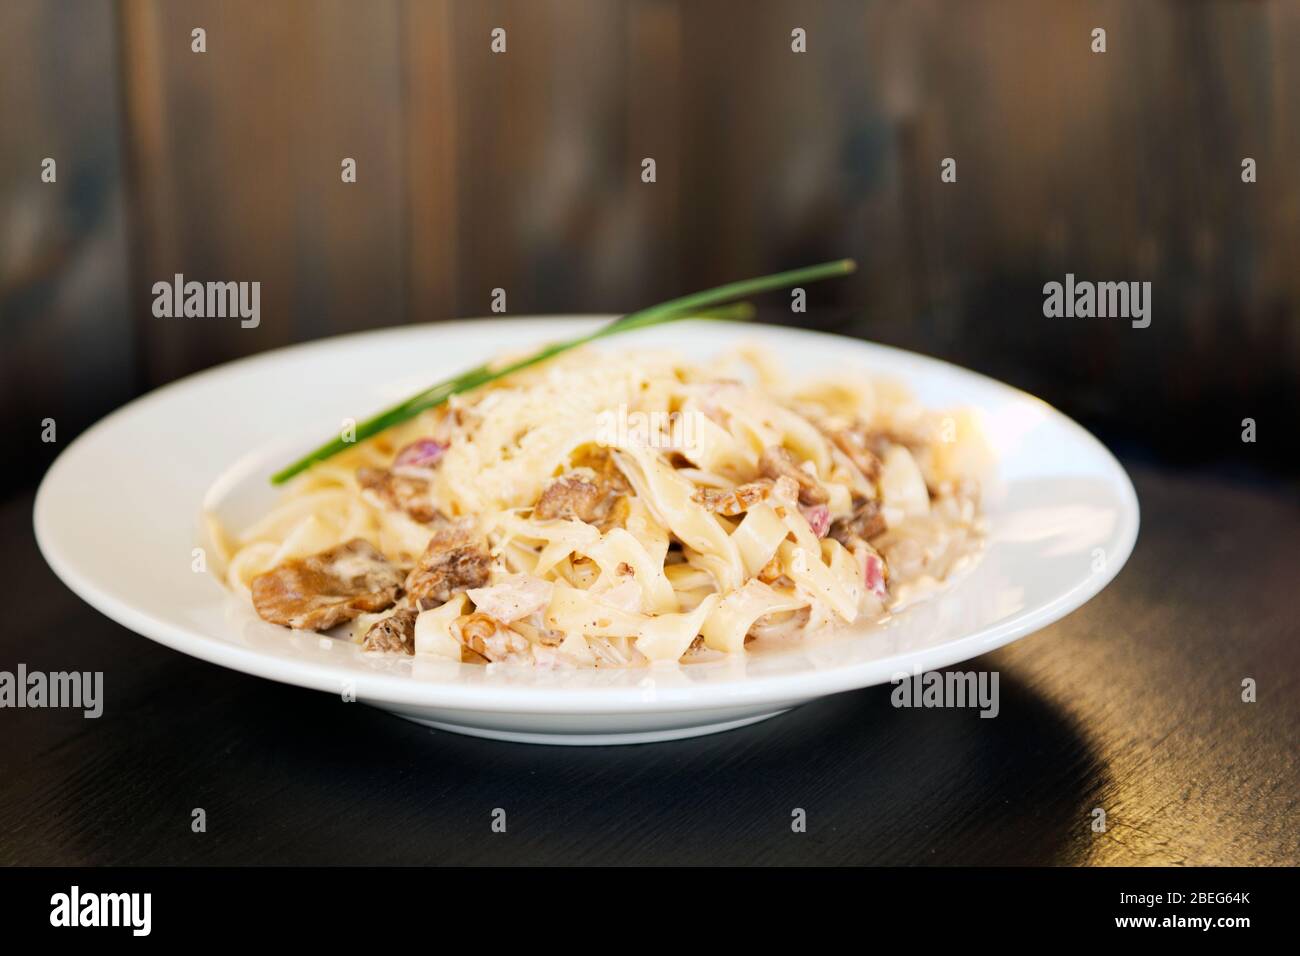 Plate of tagliatelli carbonara italian food in a rustic restaurant setting Stock Photo